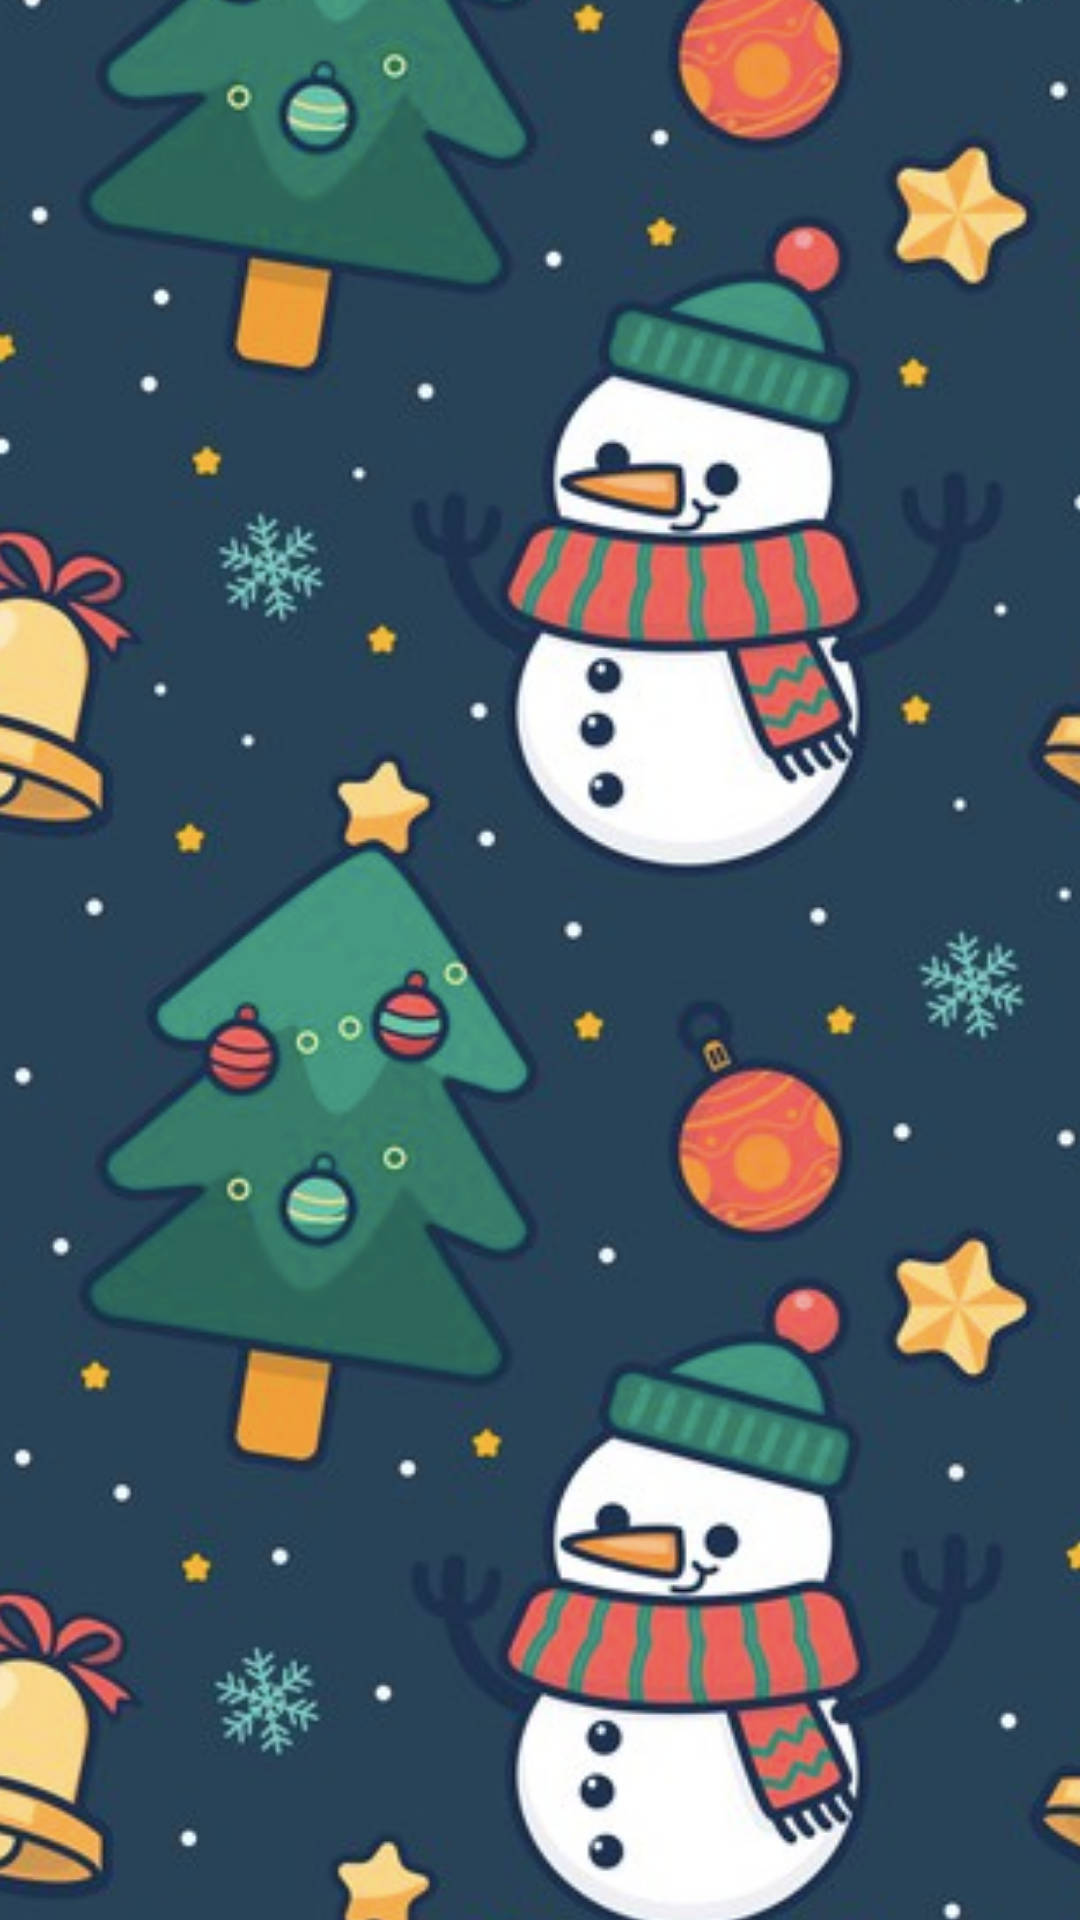 230 IPhoneiPad Christmas Wallpapers ideas  christmas wallpaper christmas  holiday wallpaper